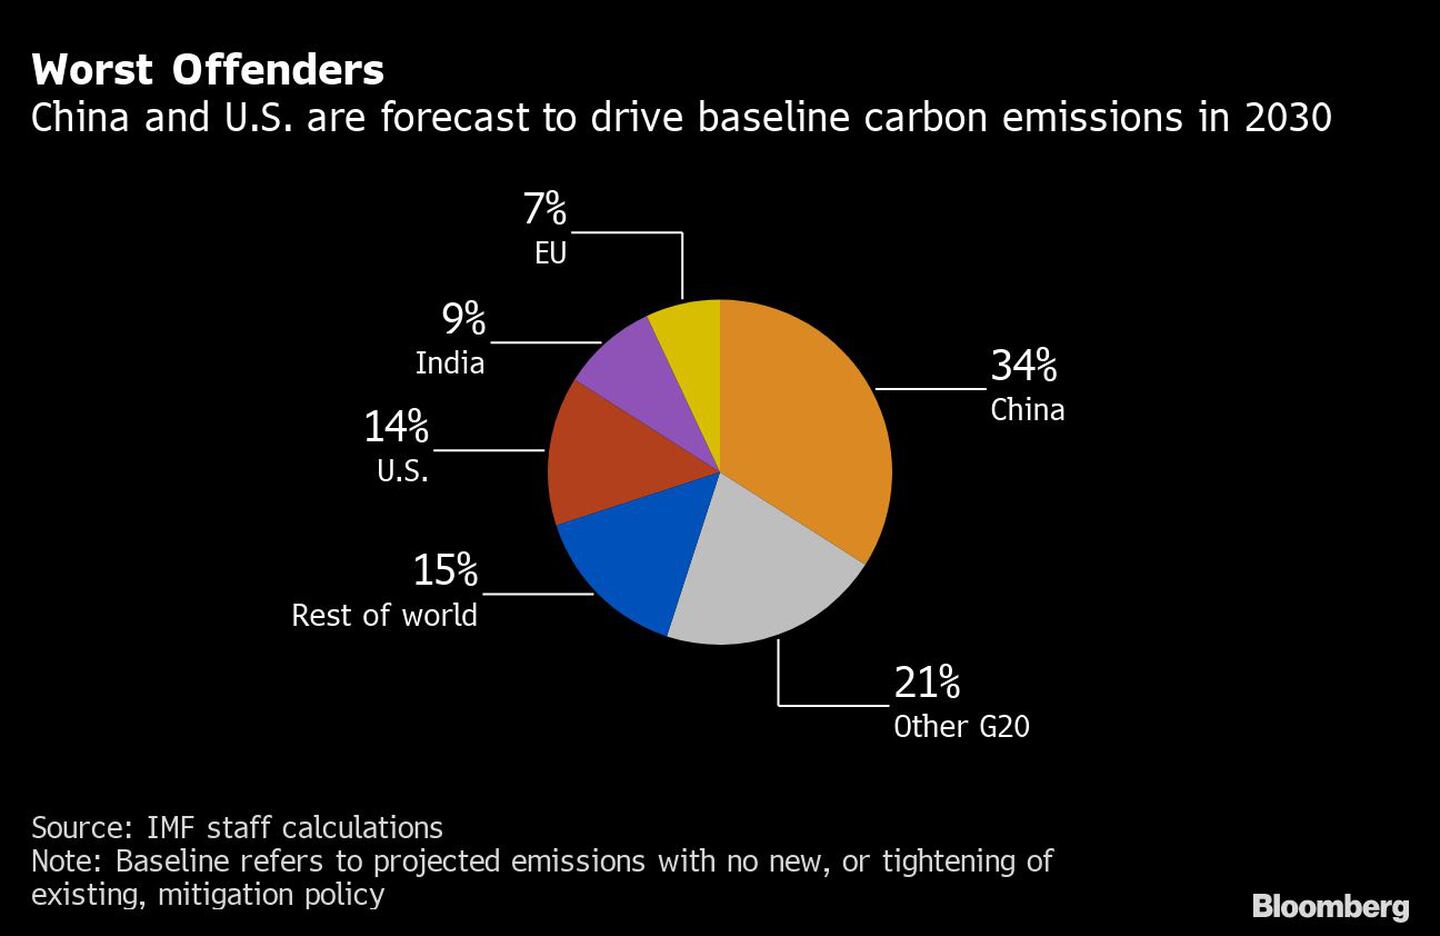 Mayores infractores de emisiones de carbonodfd